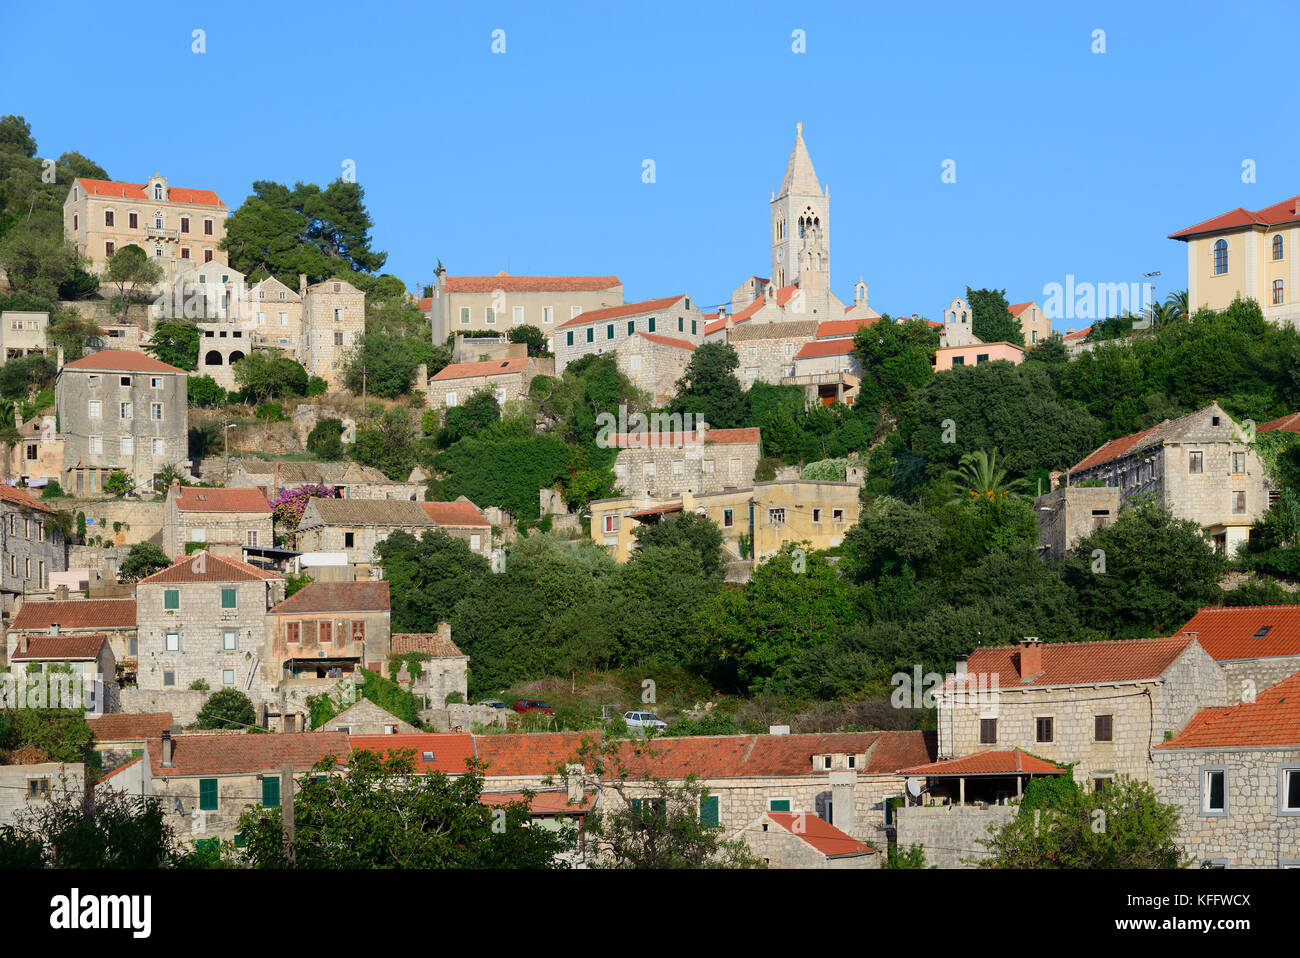 Island Capital City Lastovo, Adriatic Sea, Mediterranean Sea, Krk, Kvarner Gulf or Bay, Croatia Stock Photo